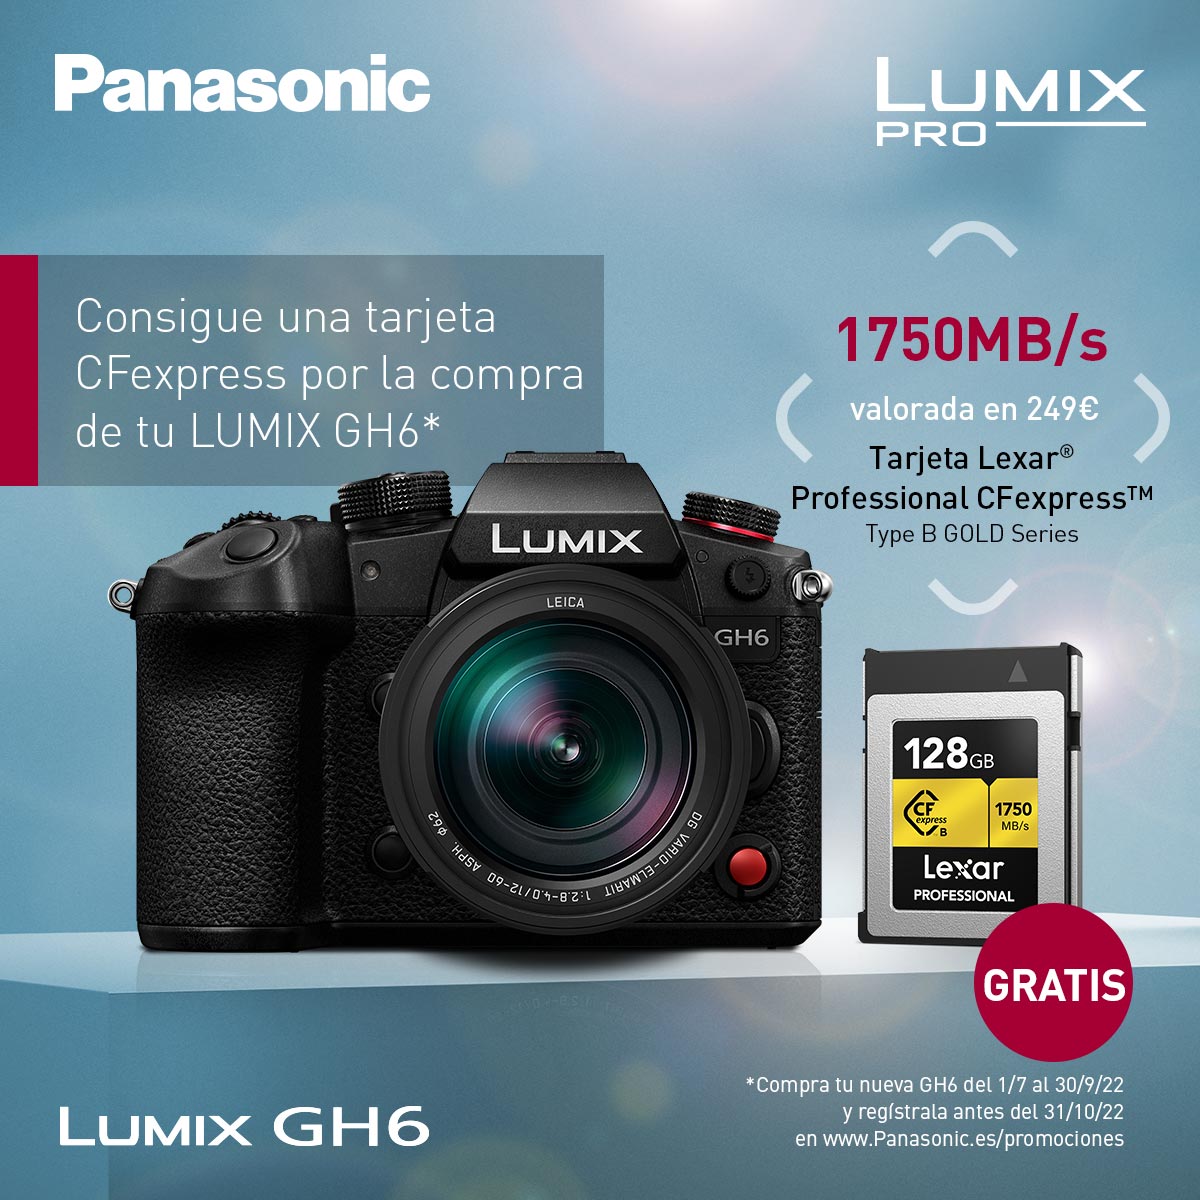 Panasonic Promo GH6 - Regalo Tarjeta Lexar